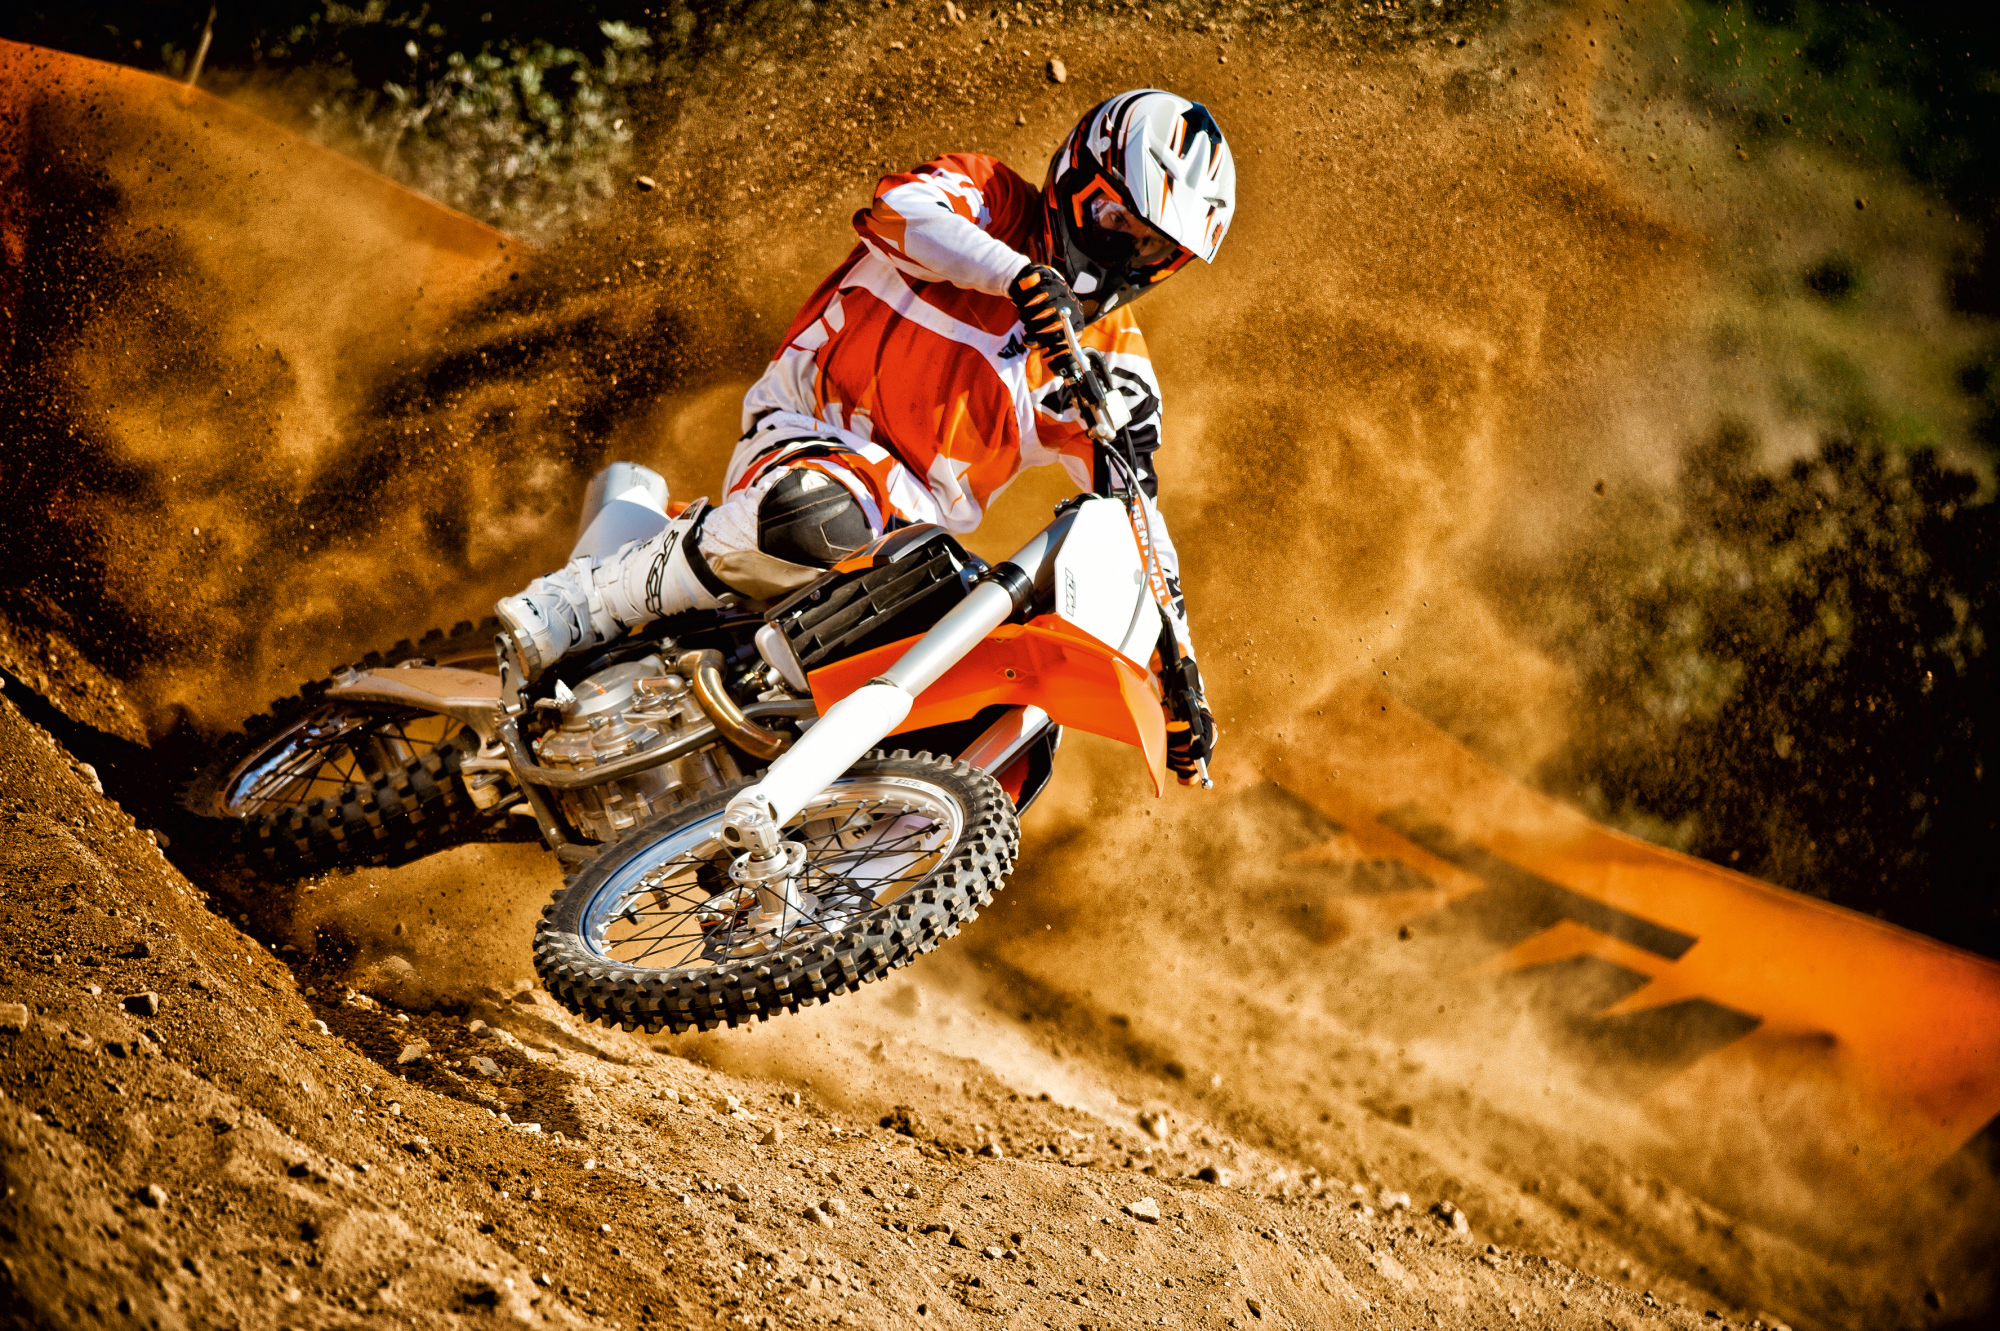 HD Motocross Ktm Backgrounds | PixelsTalk.Net, motocross wallpaper hd